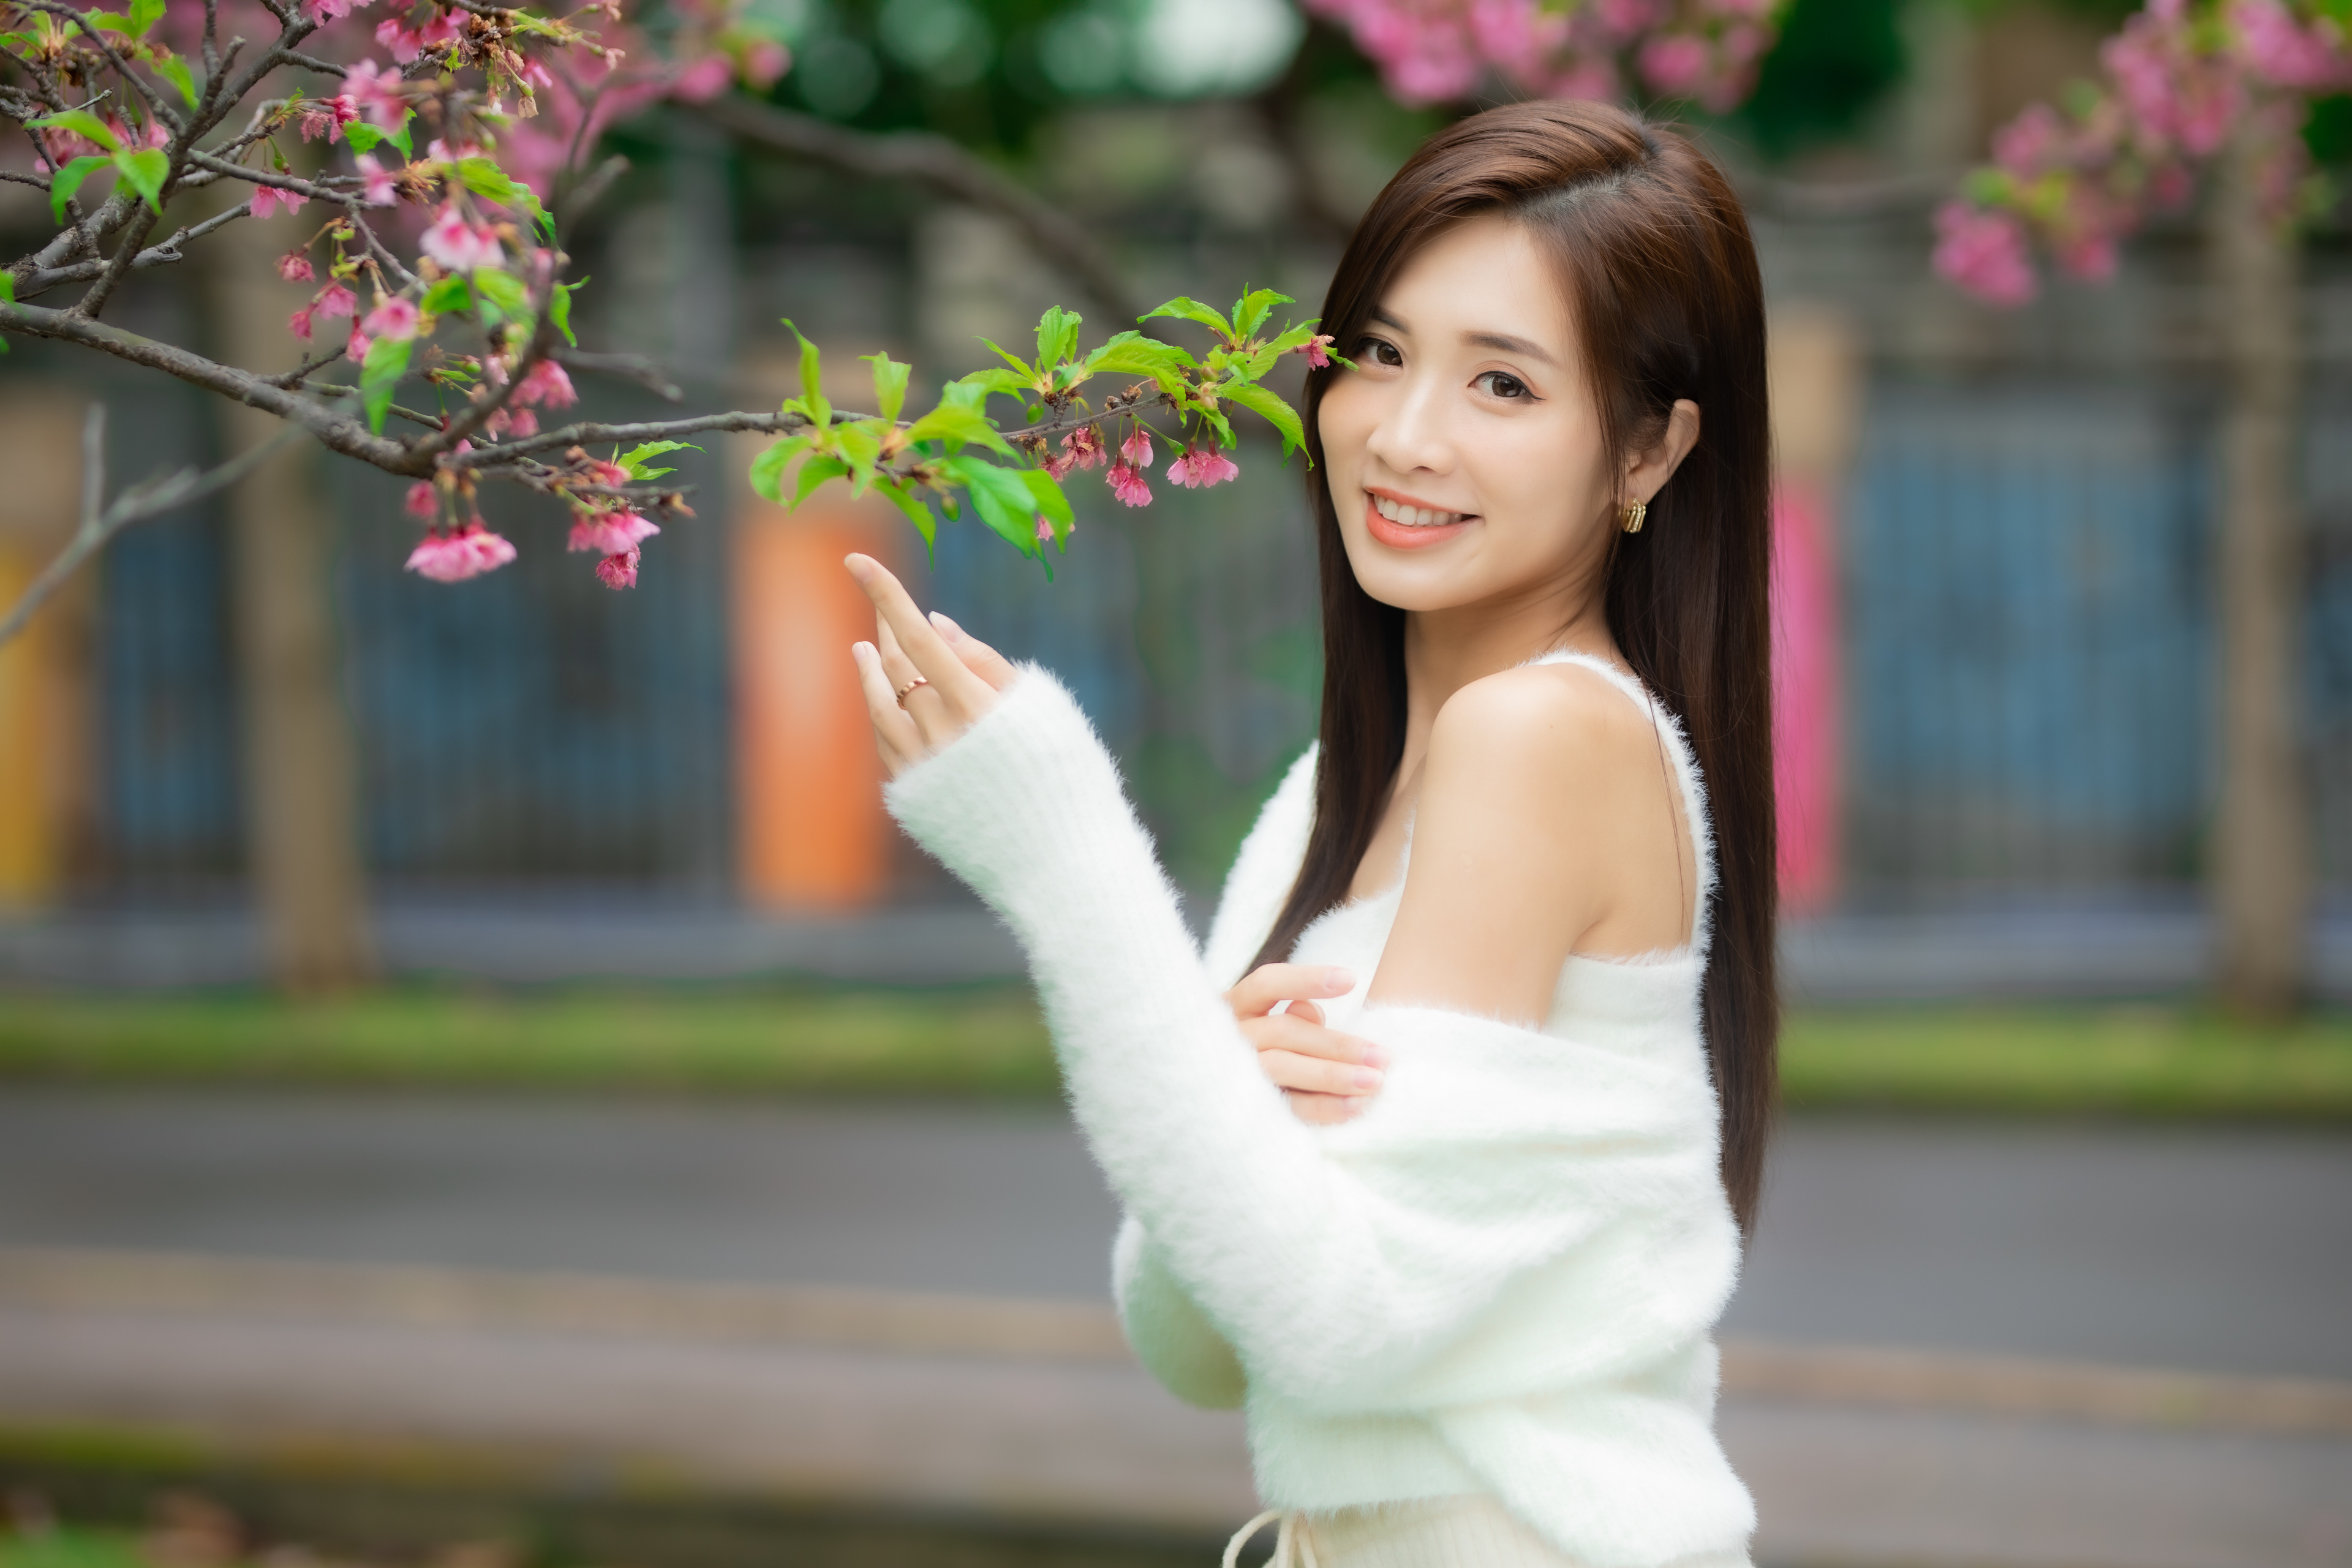 Asian Model Women Long Hair Dark Hair Flowers Trees Outdoors Bokeh 3840x2560